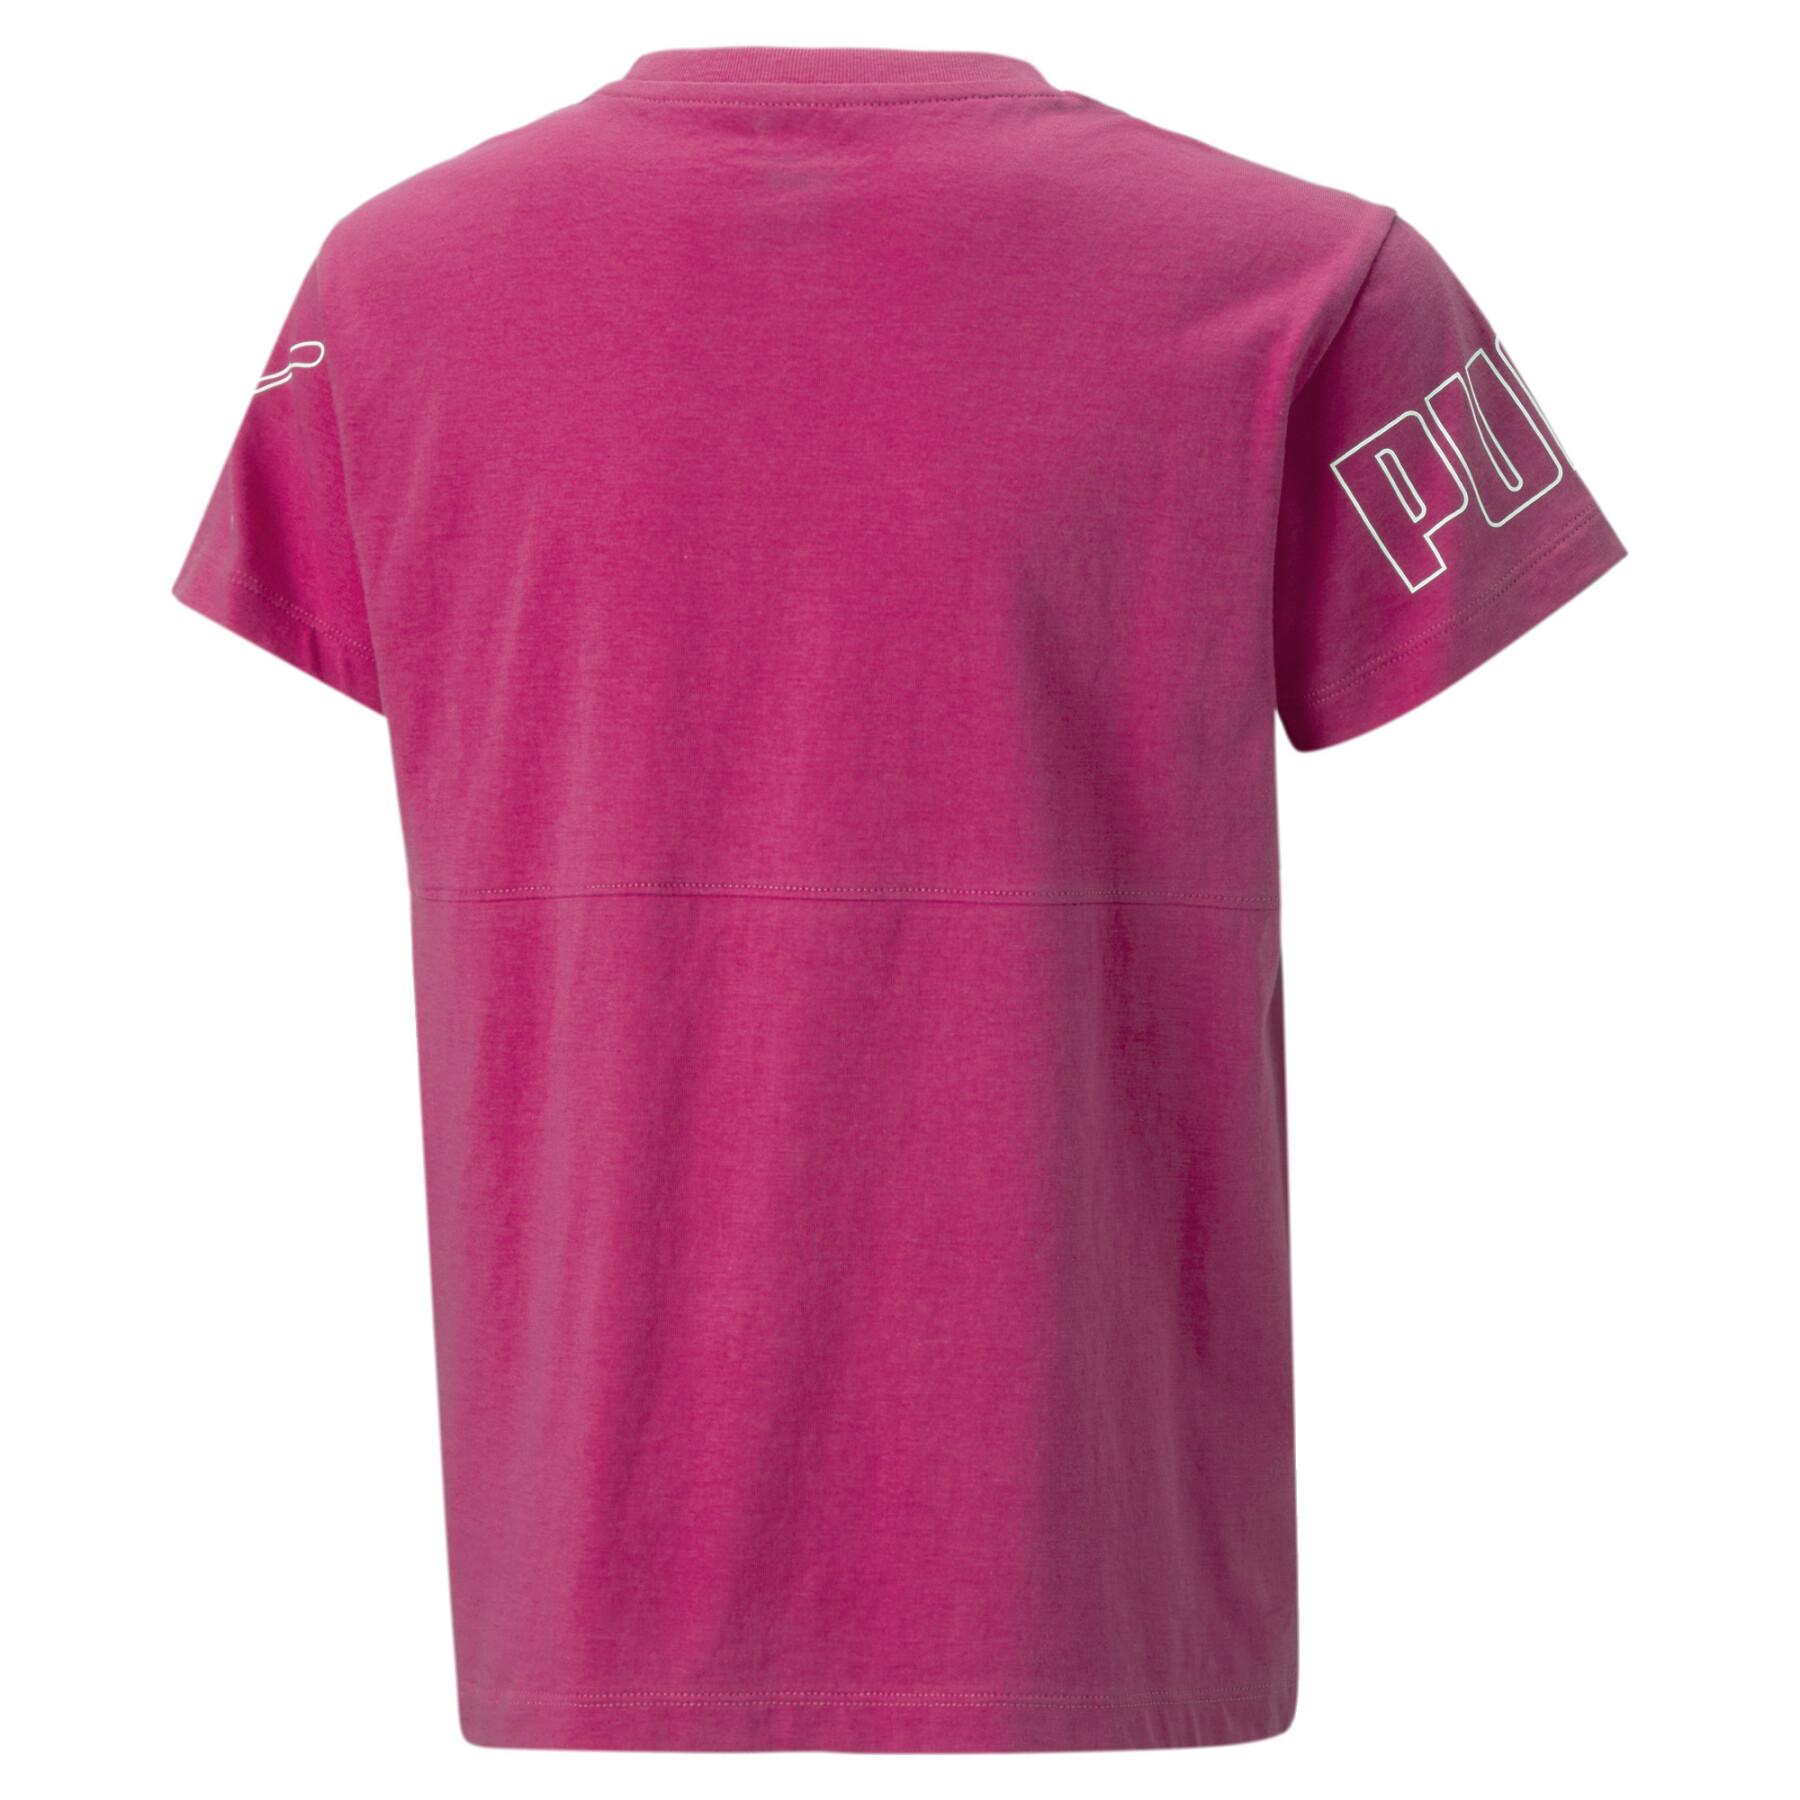 Girl's T-shirt Puma Power Colorblock - T-shirts & Tank Tops - Clothing -  Kids